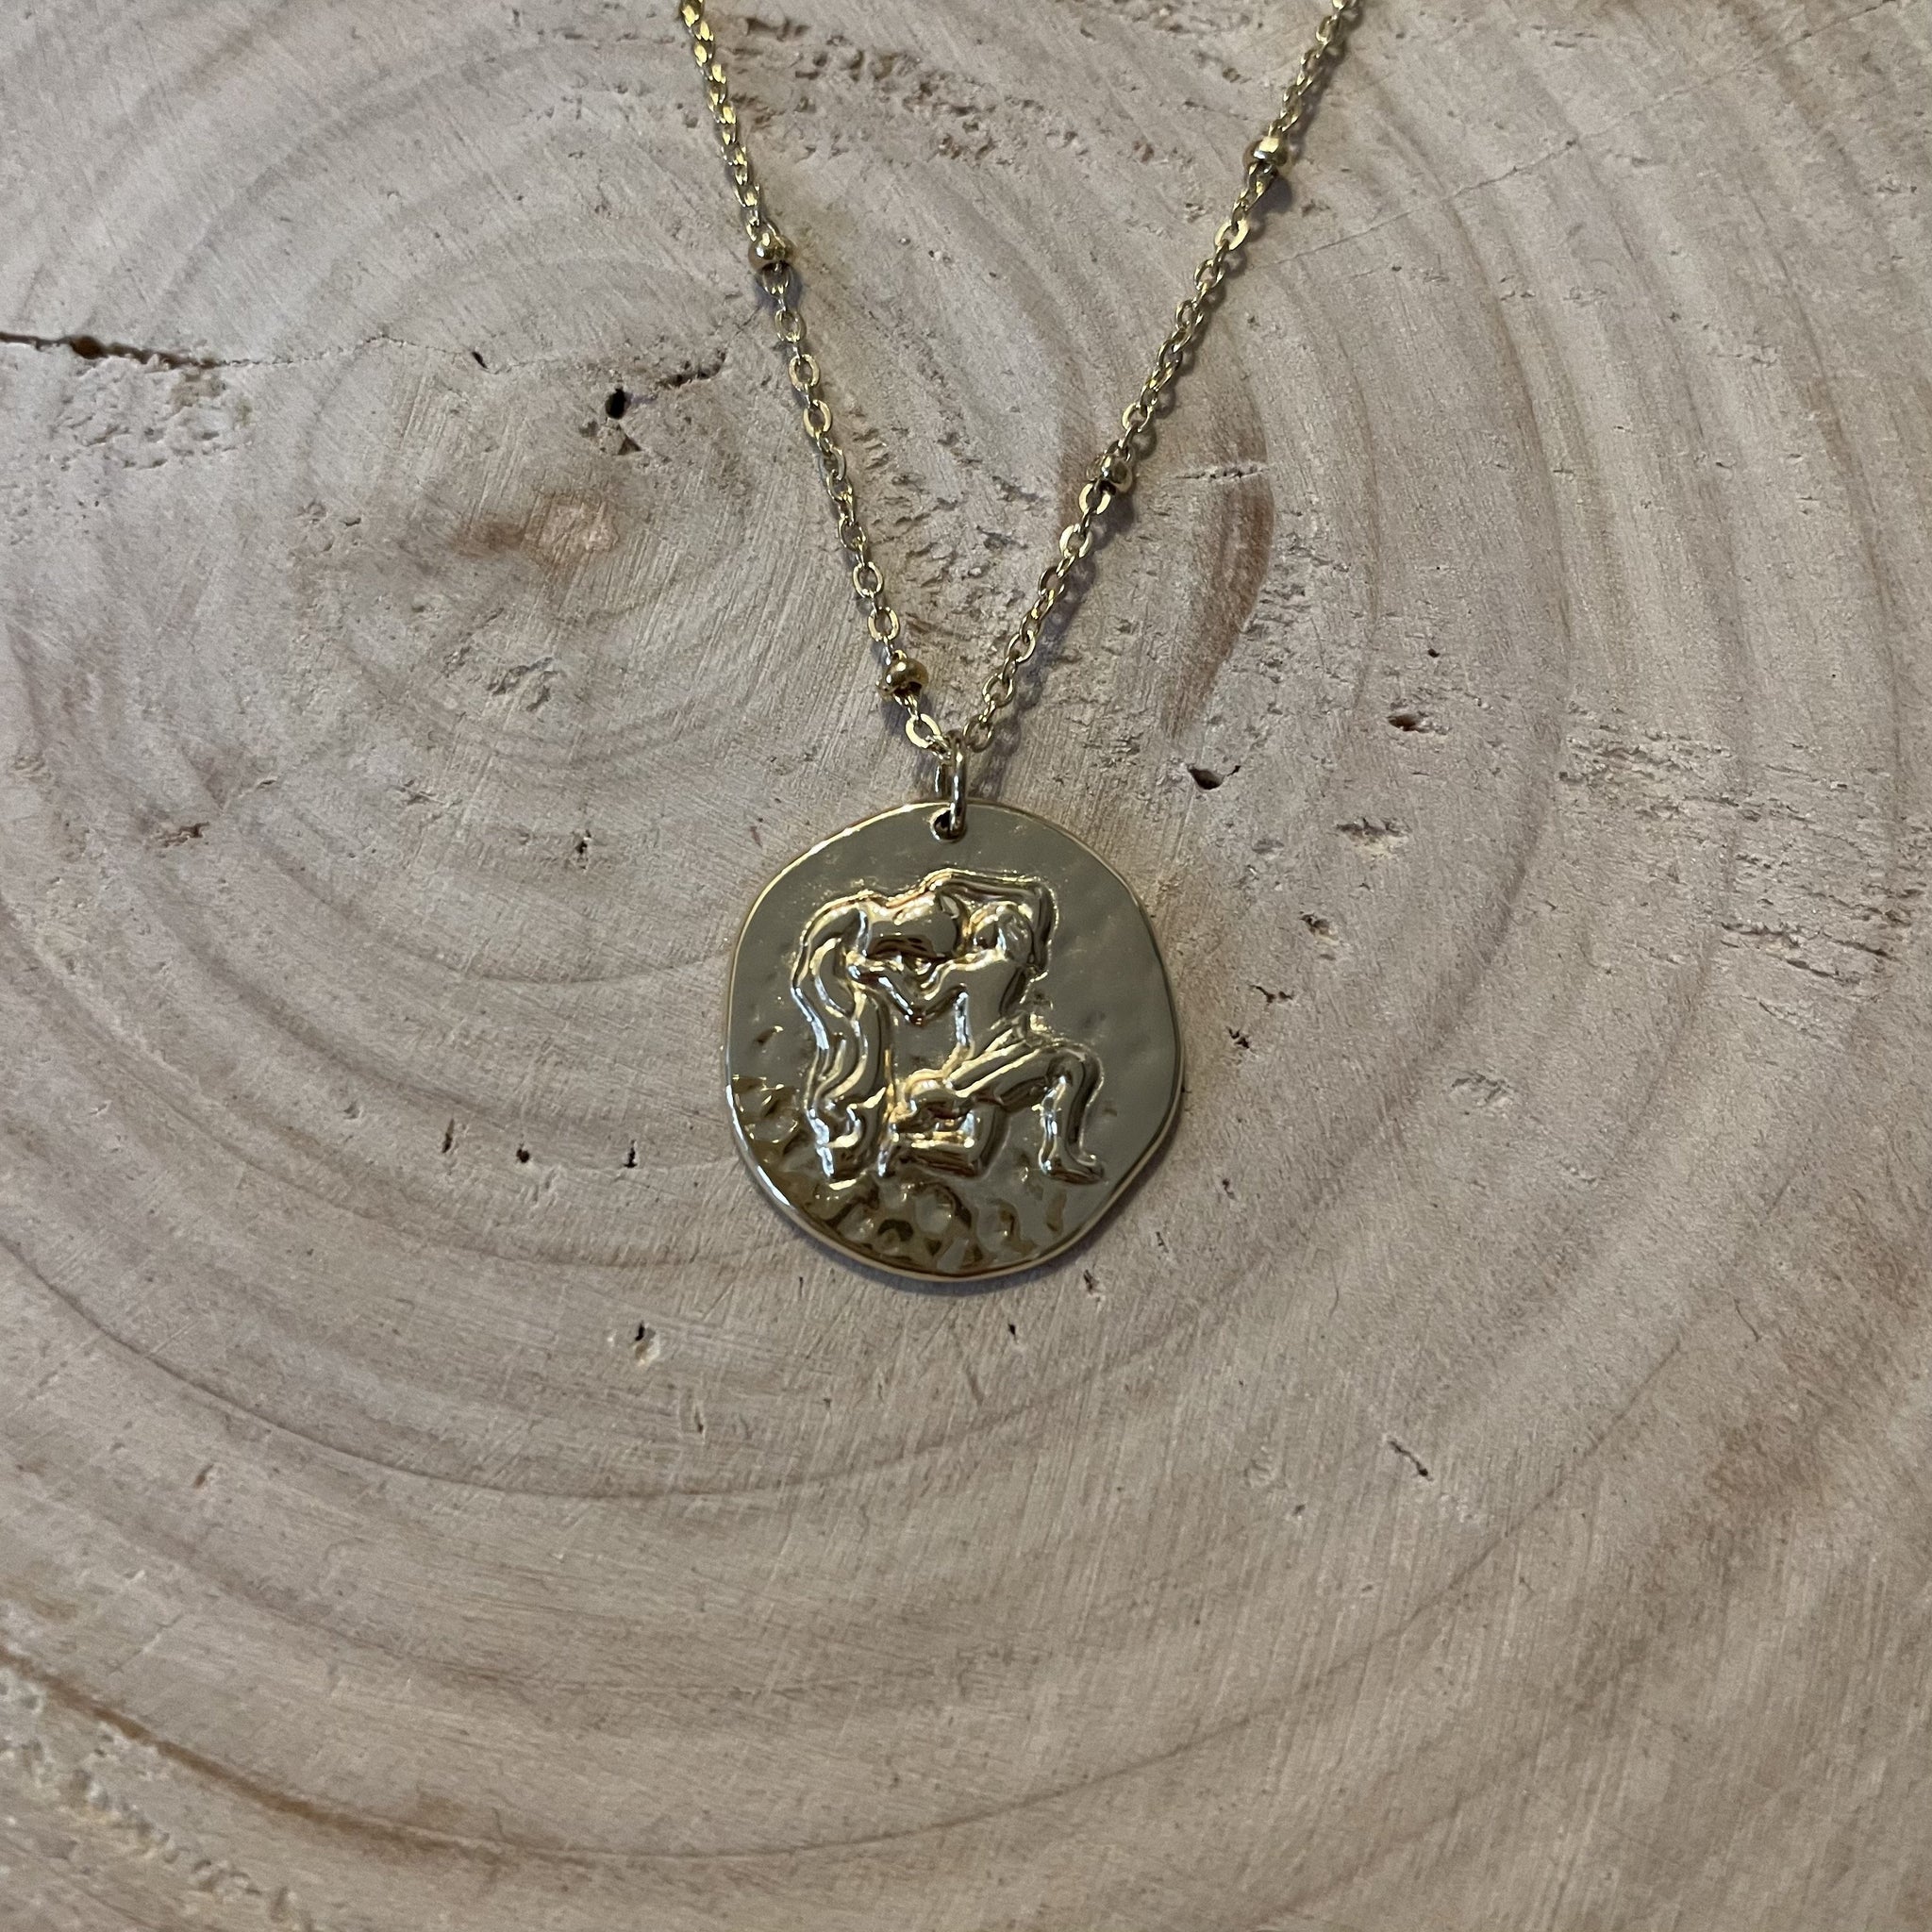 Astro Necklace - Silver - Taurus